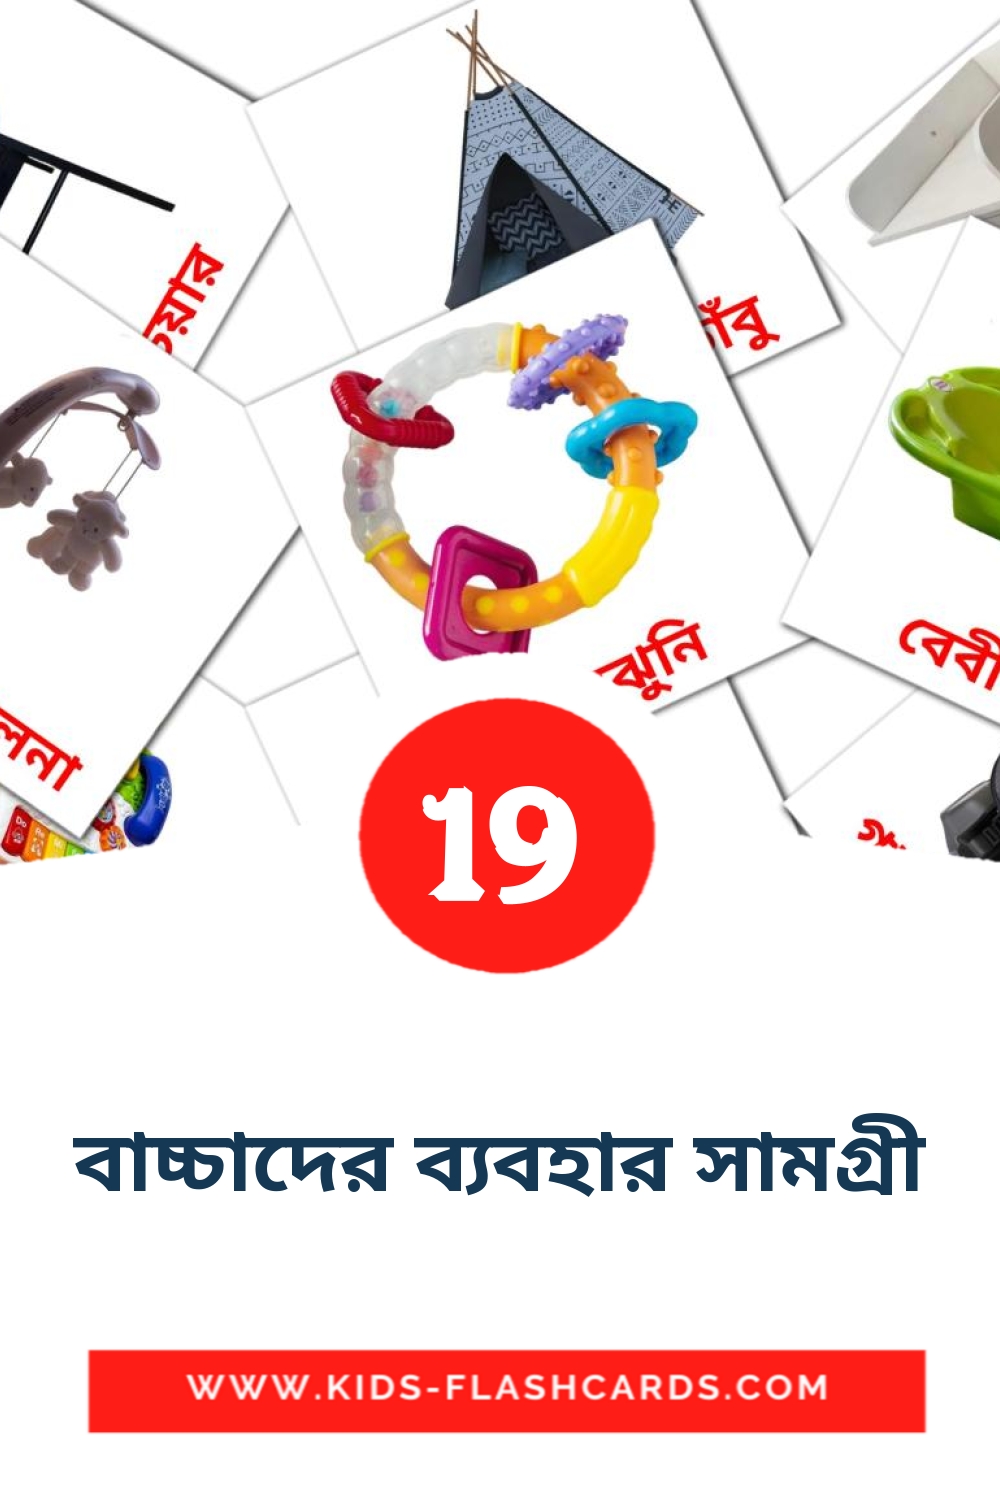 19 tarjetas didacticas de বাচ্চাদের ব্যবহার সামগ্রী para el jardín de infancia en bengalí